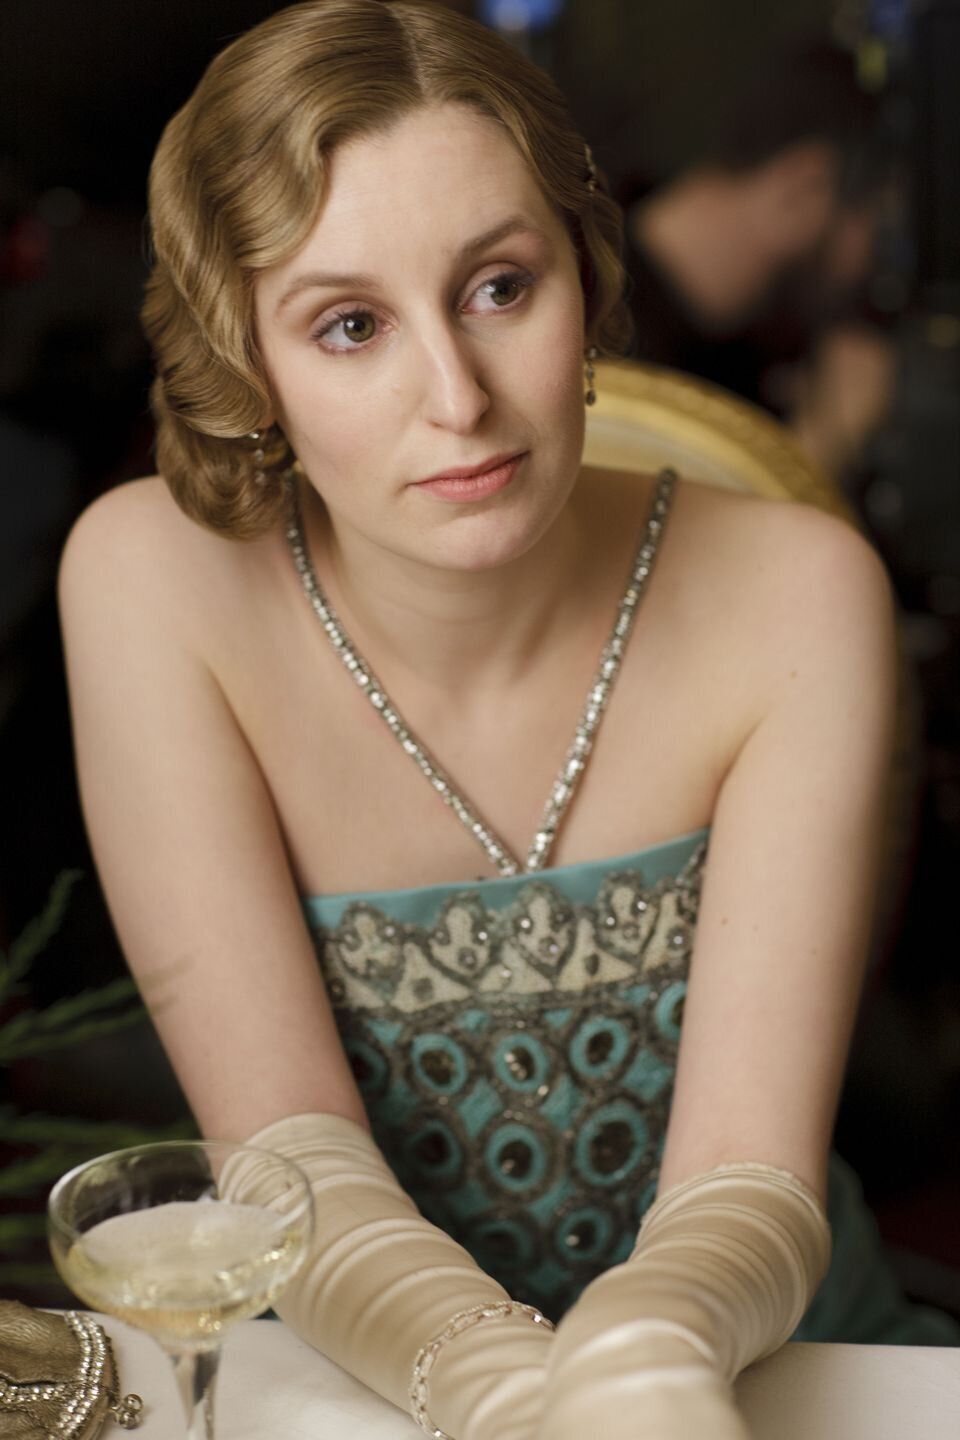 Laura in the original run of Downton Abbey